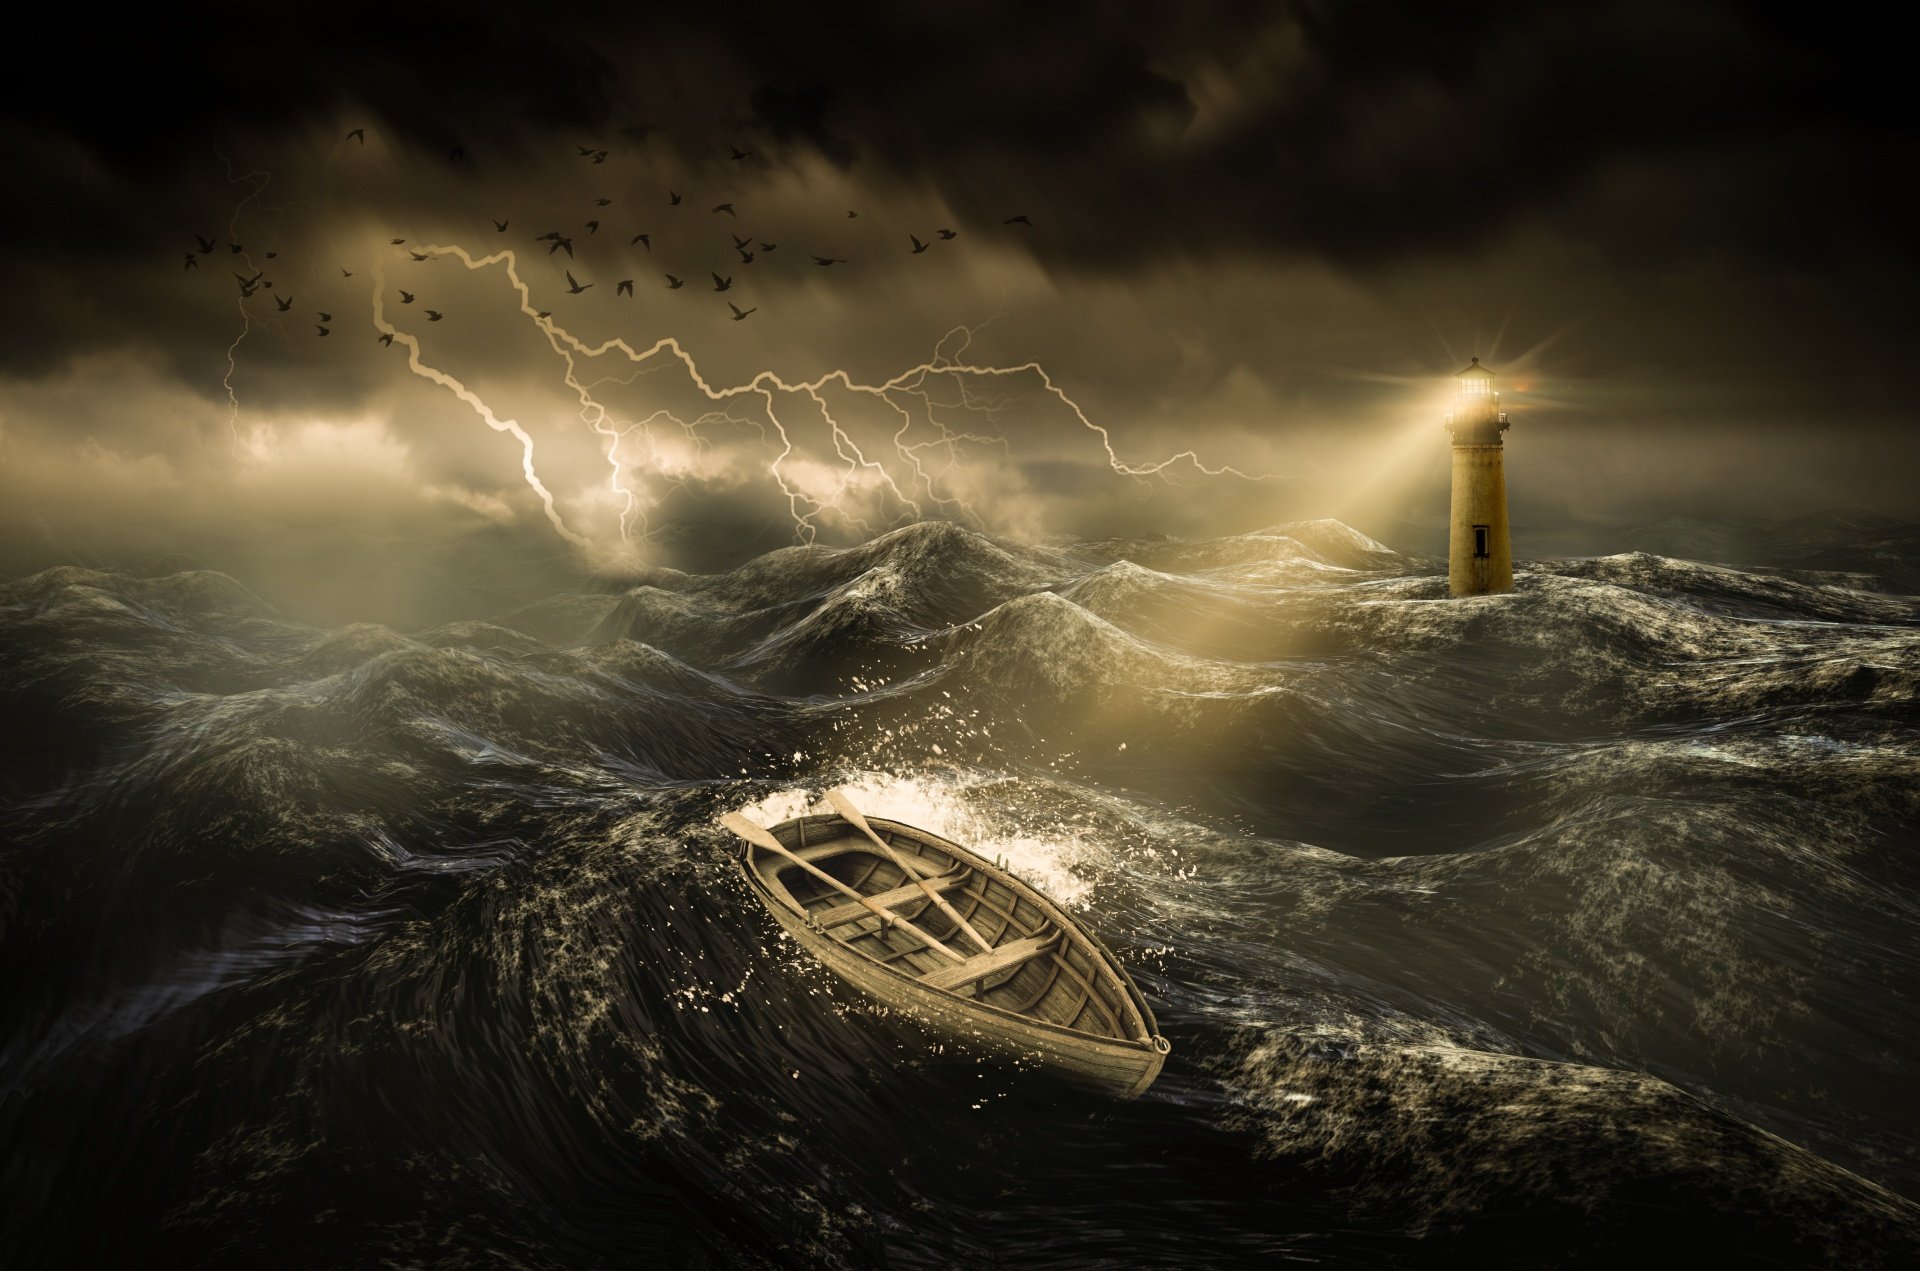 Далекий шторм. Квест старый Маяк Саратов. Маяк лодка в шторм. Море шторм. Корабль в шторм.